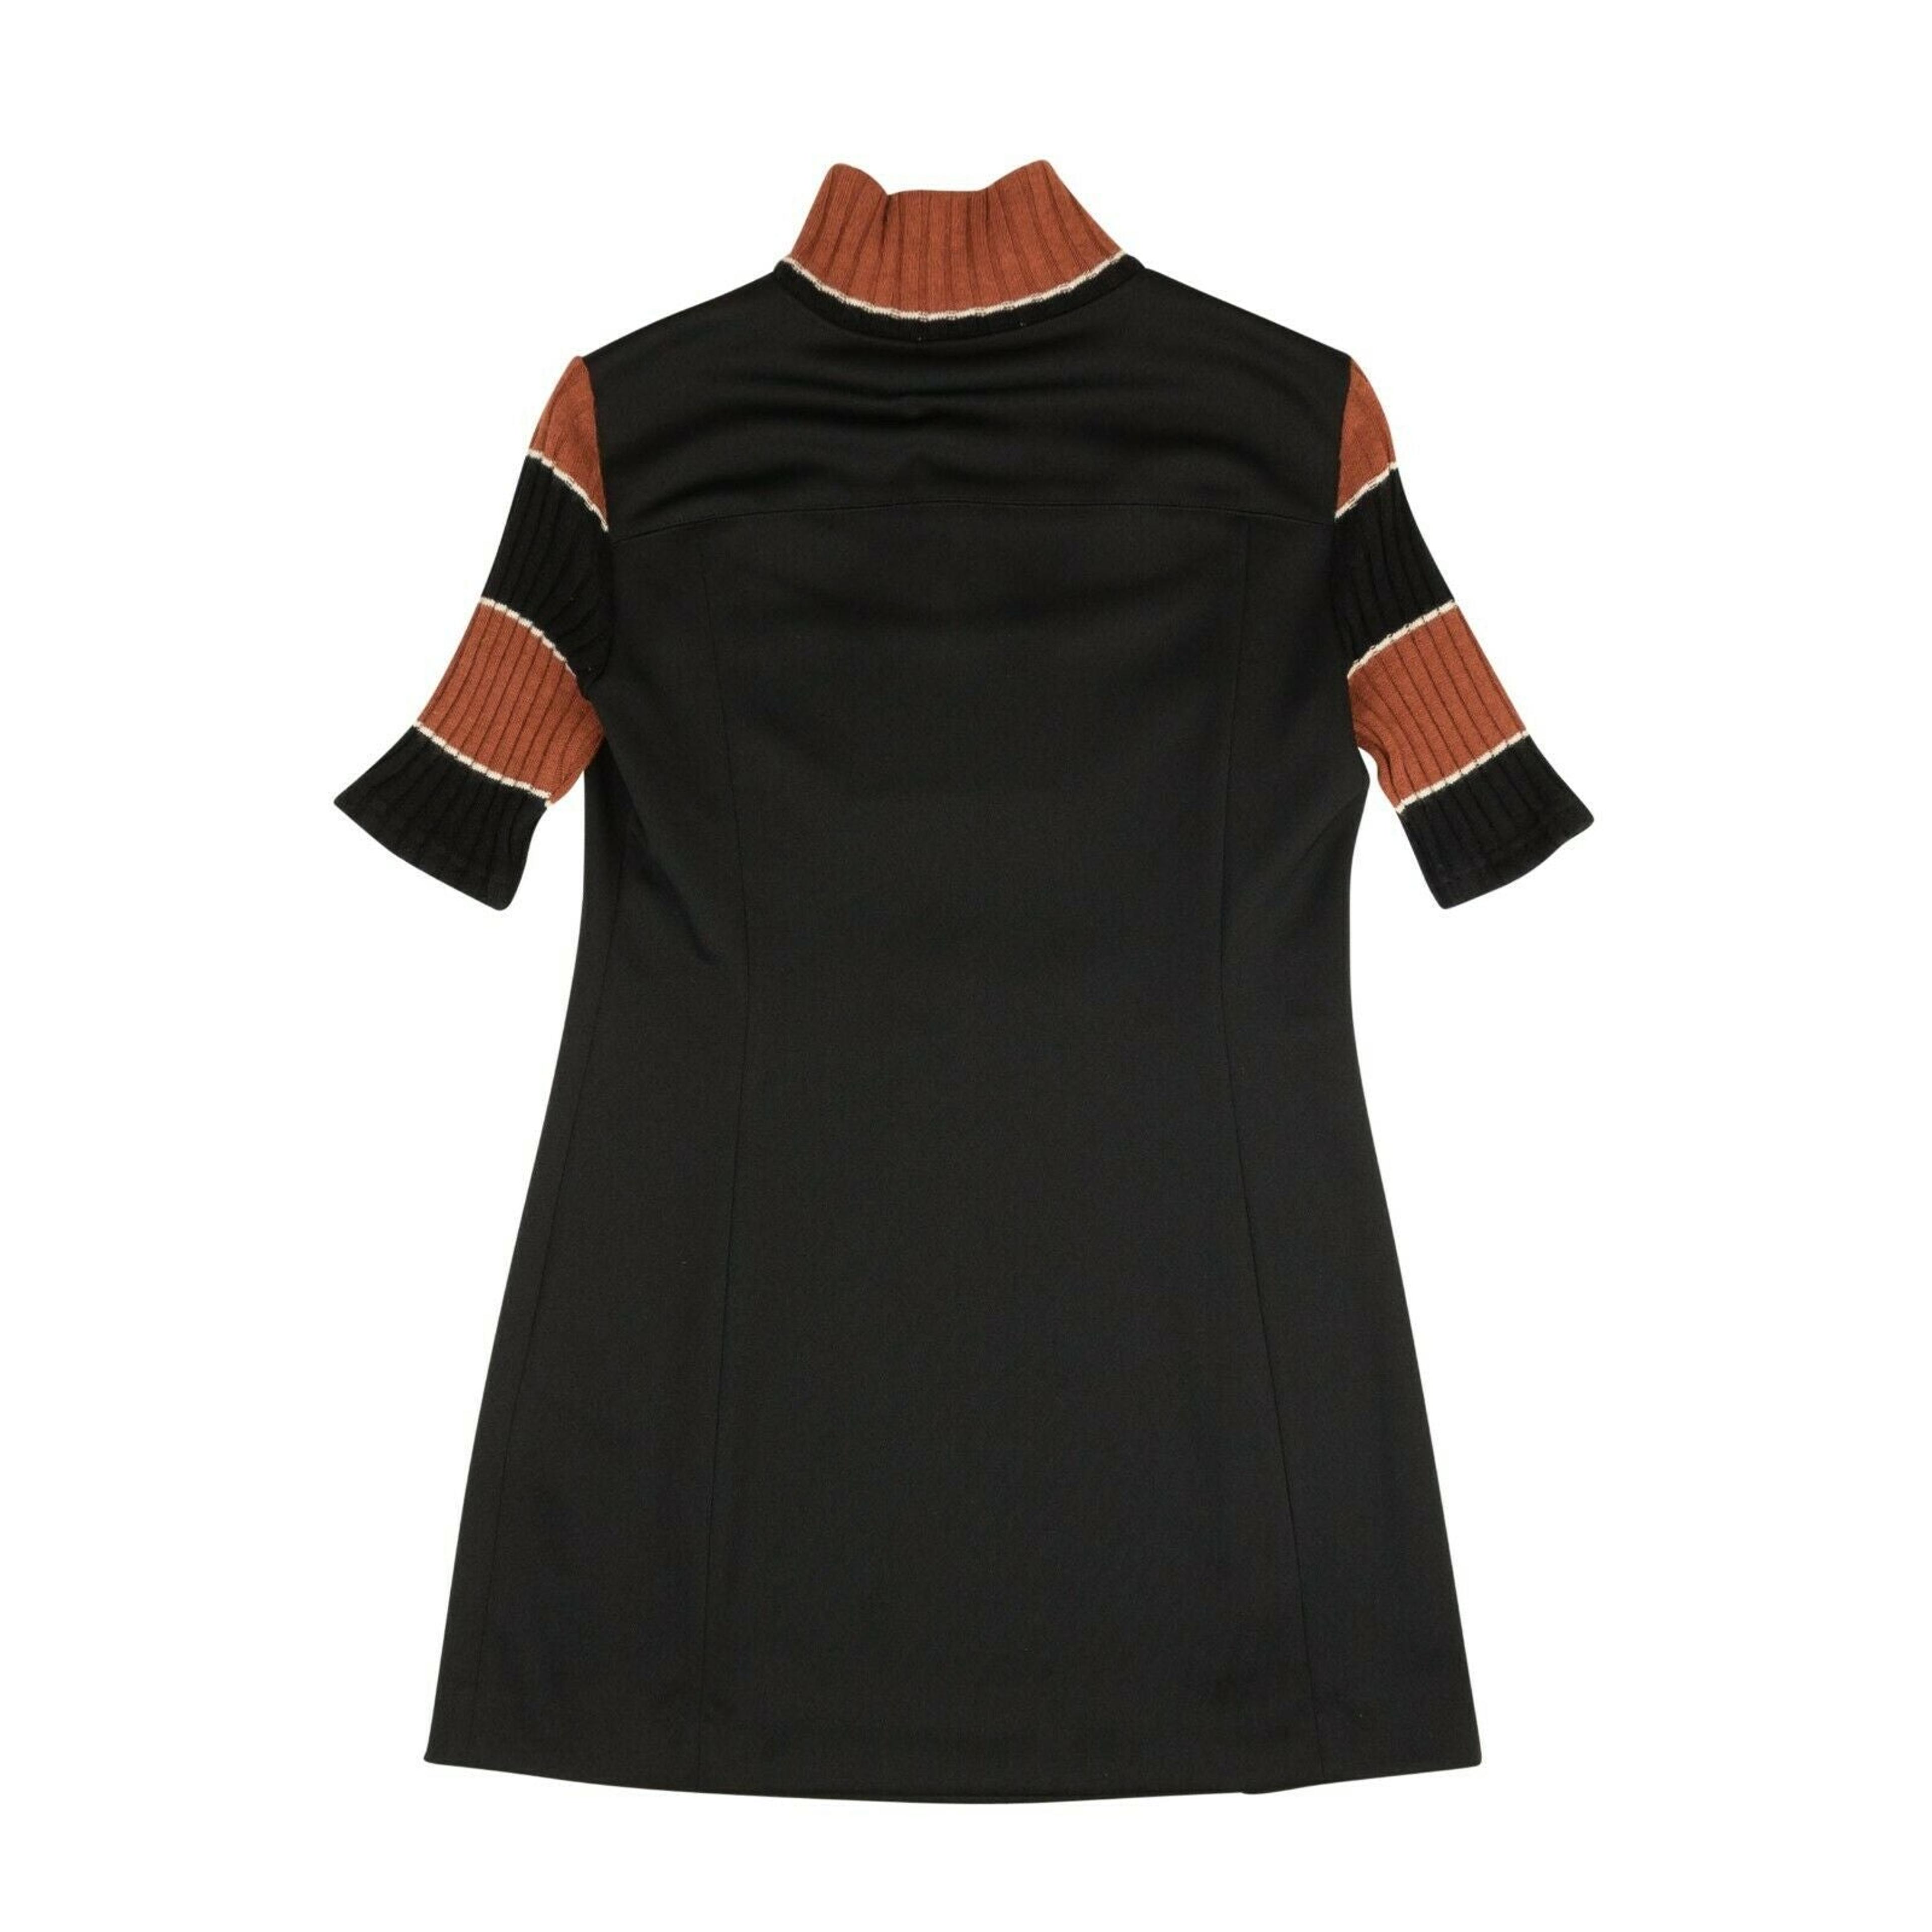 Alternate View 1 of Black Zip Turtleneck Mini Dress